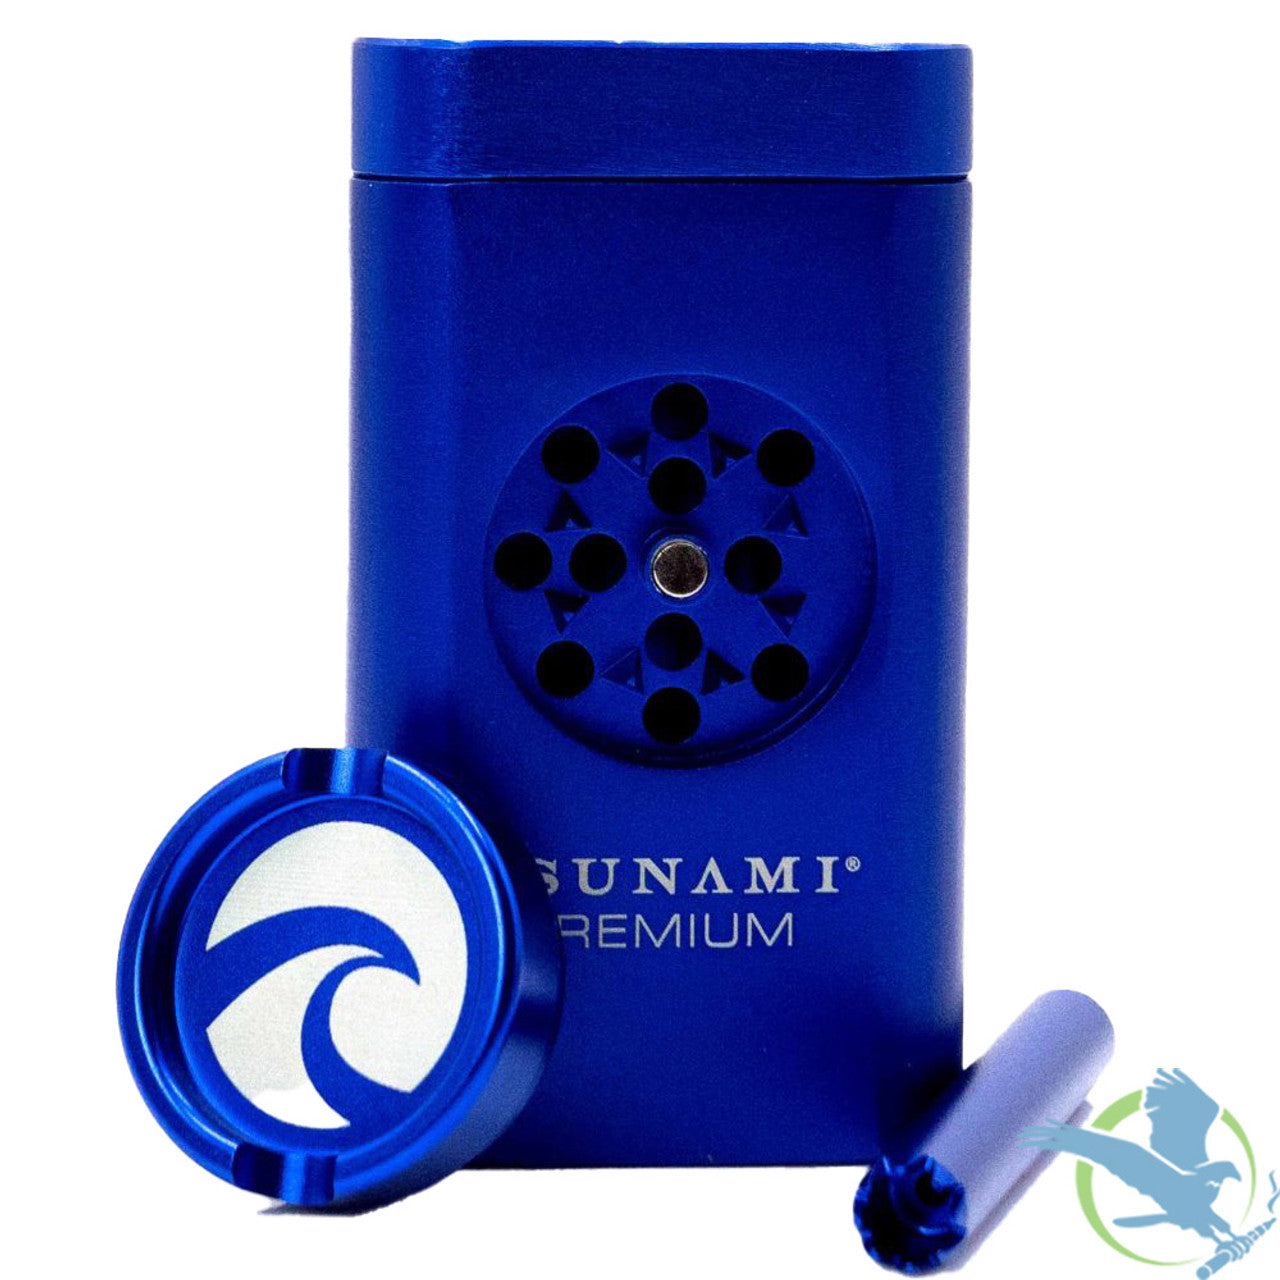 TSUNAMI Premium Dugout